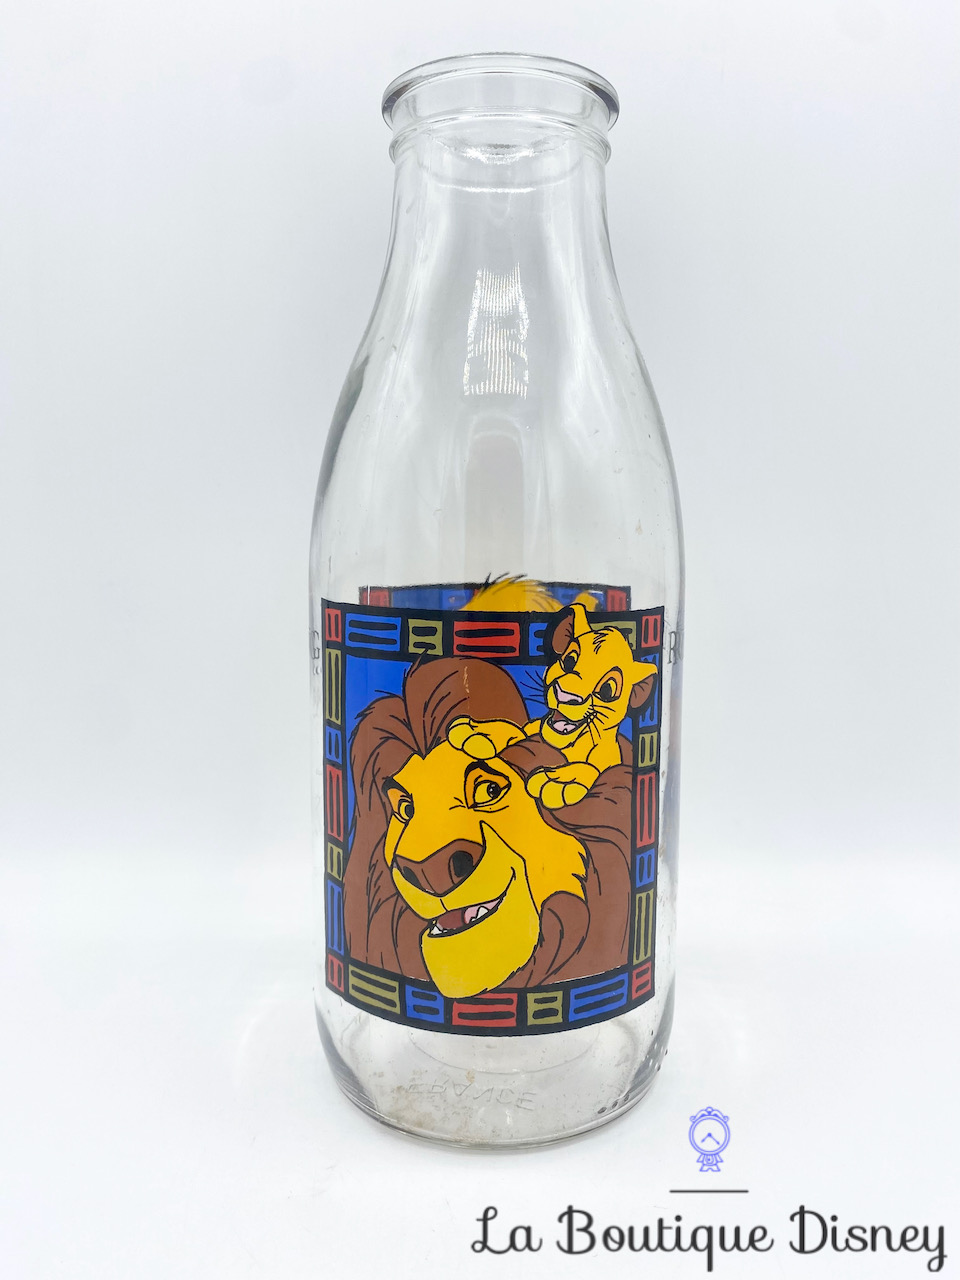 Carafe Le roi lion Disney vintage bouteille verre The Lion King Mufasa Simba